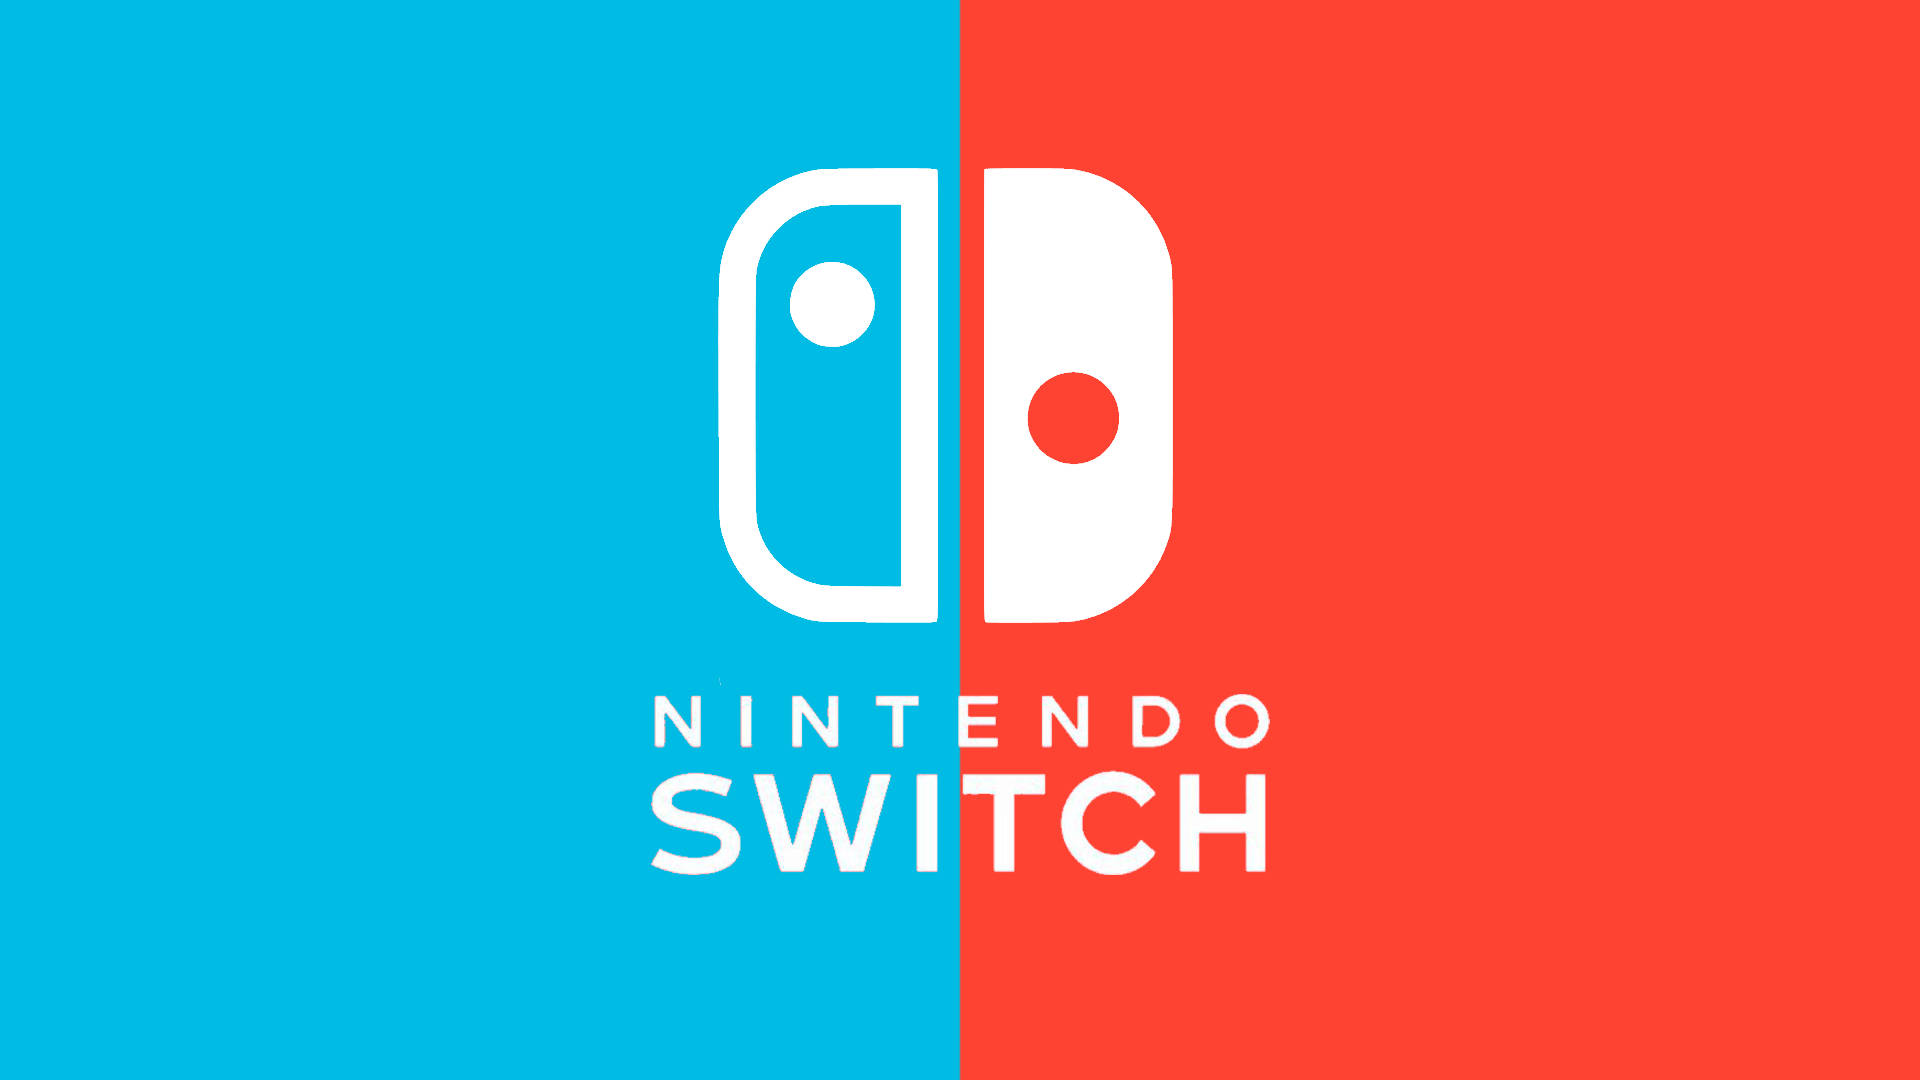 Nintendoswitch-logo Mit Blau-rotem Hintergrundbild. Wallpaper